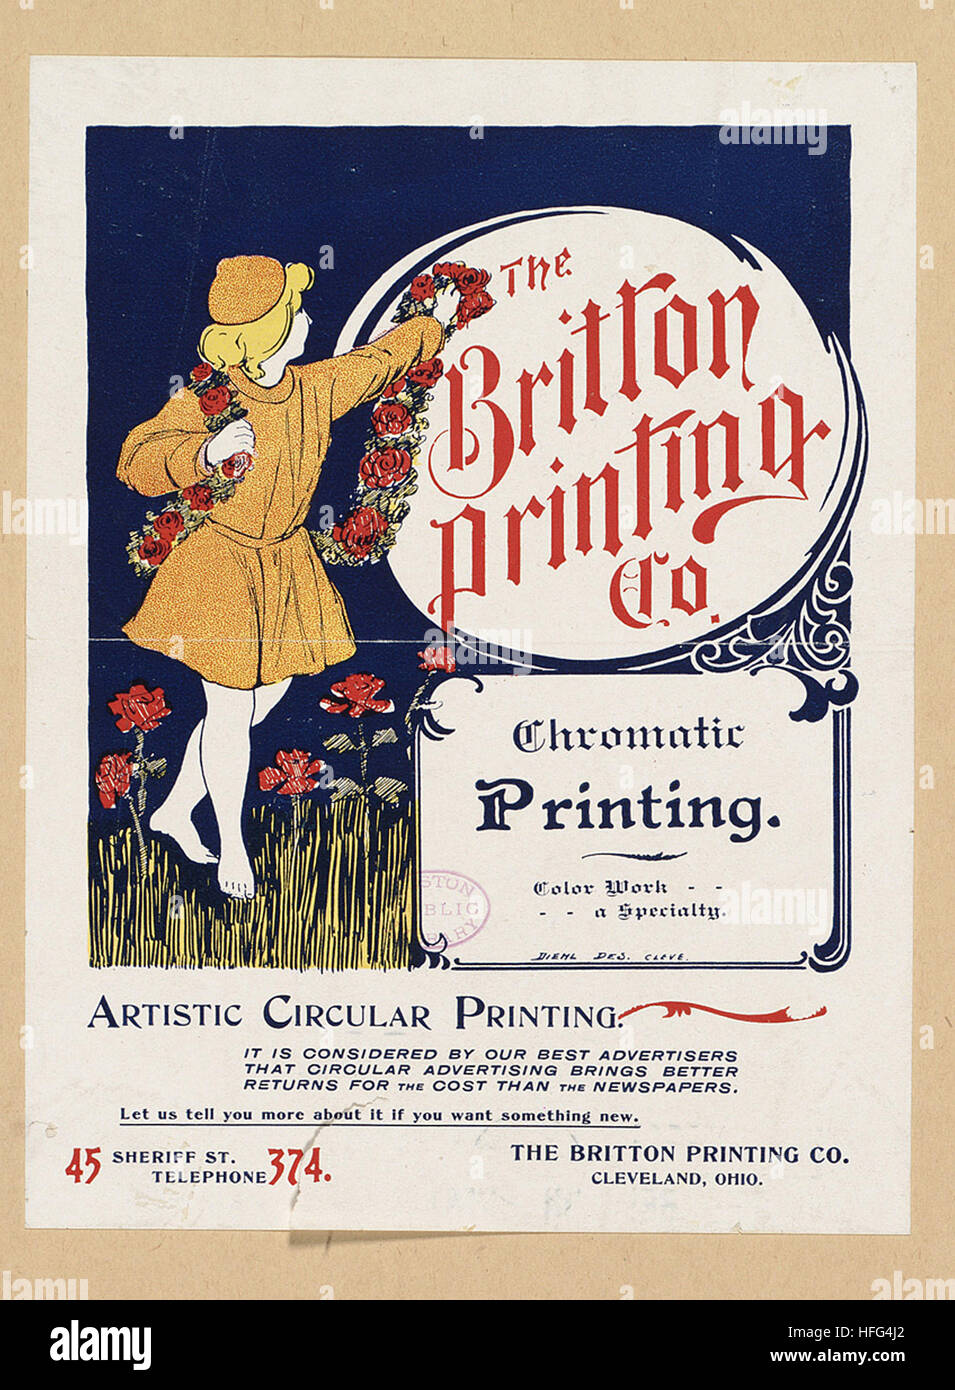 The Britton Printing Co. Stock Photo